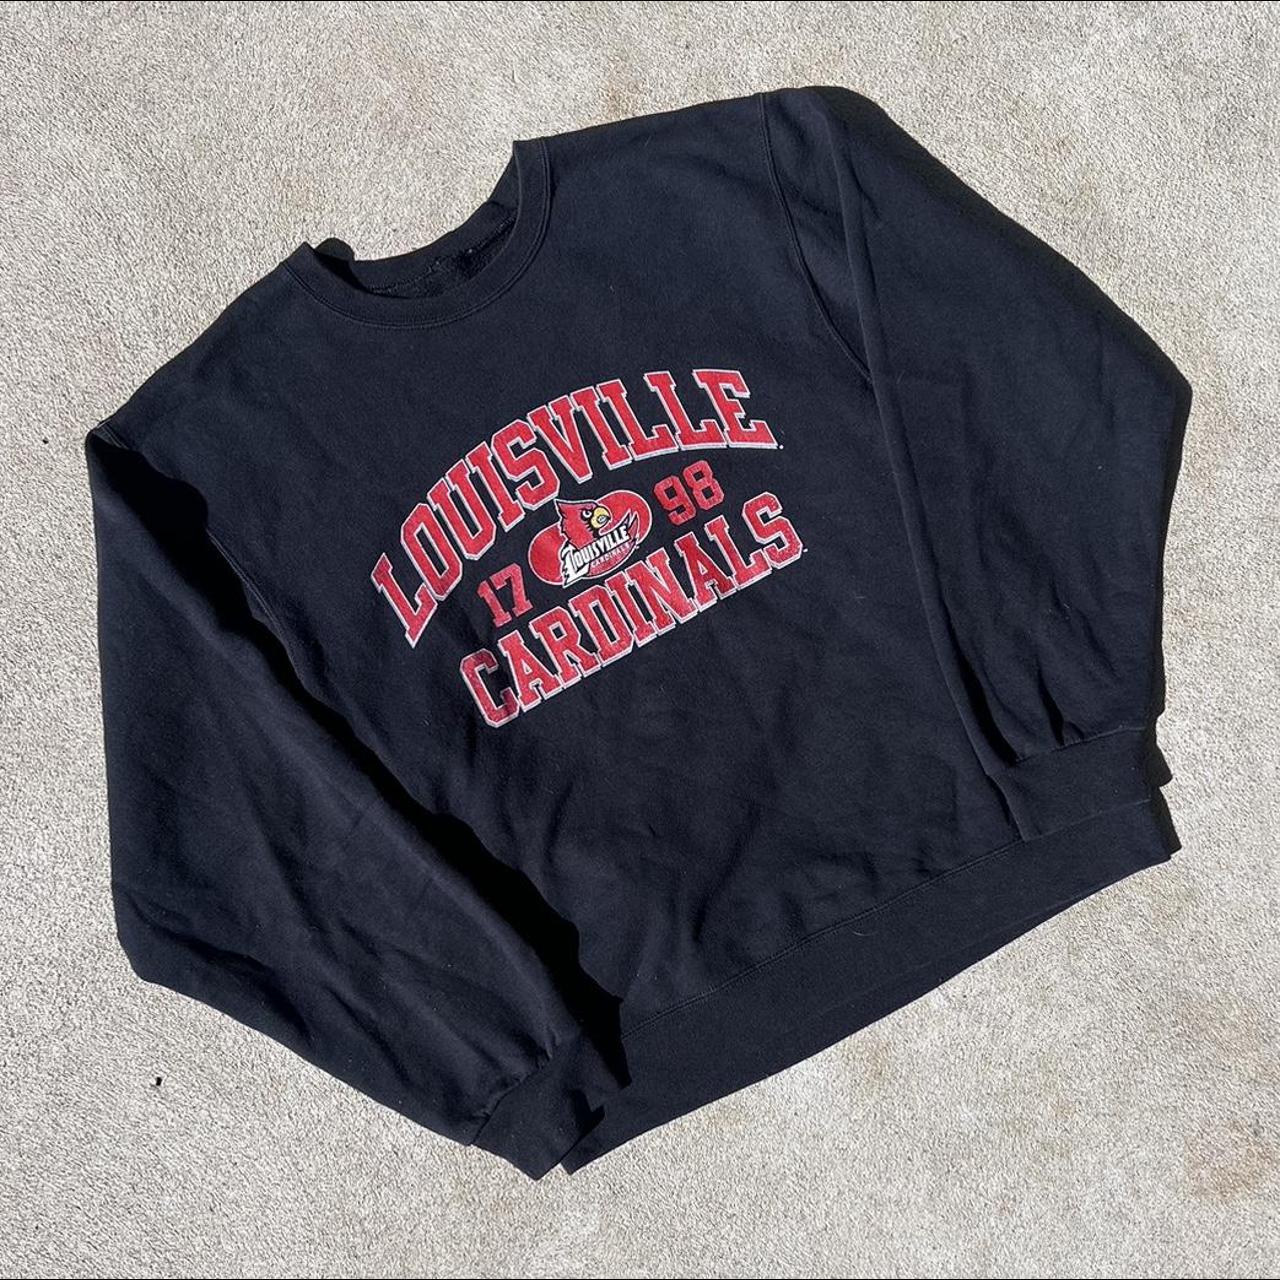 Vintage University Louisville Sweatshirt Louisville Crewneck 